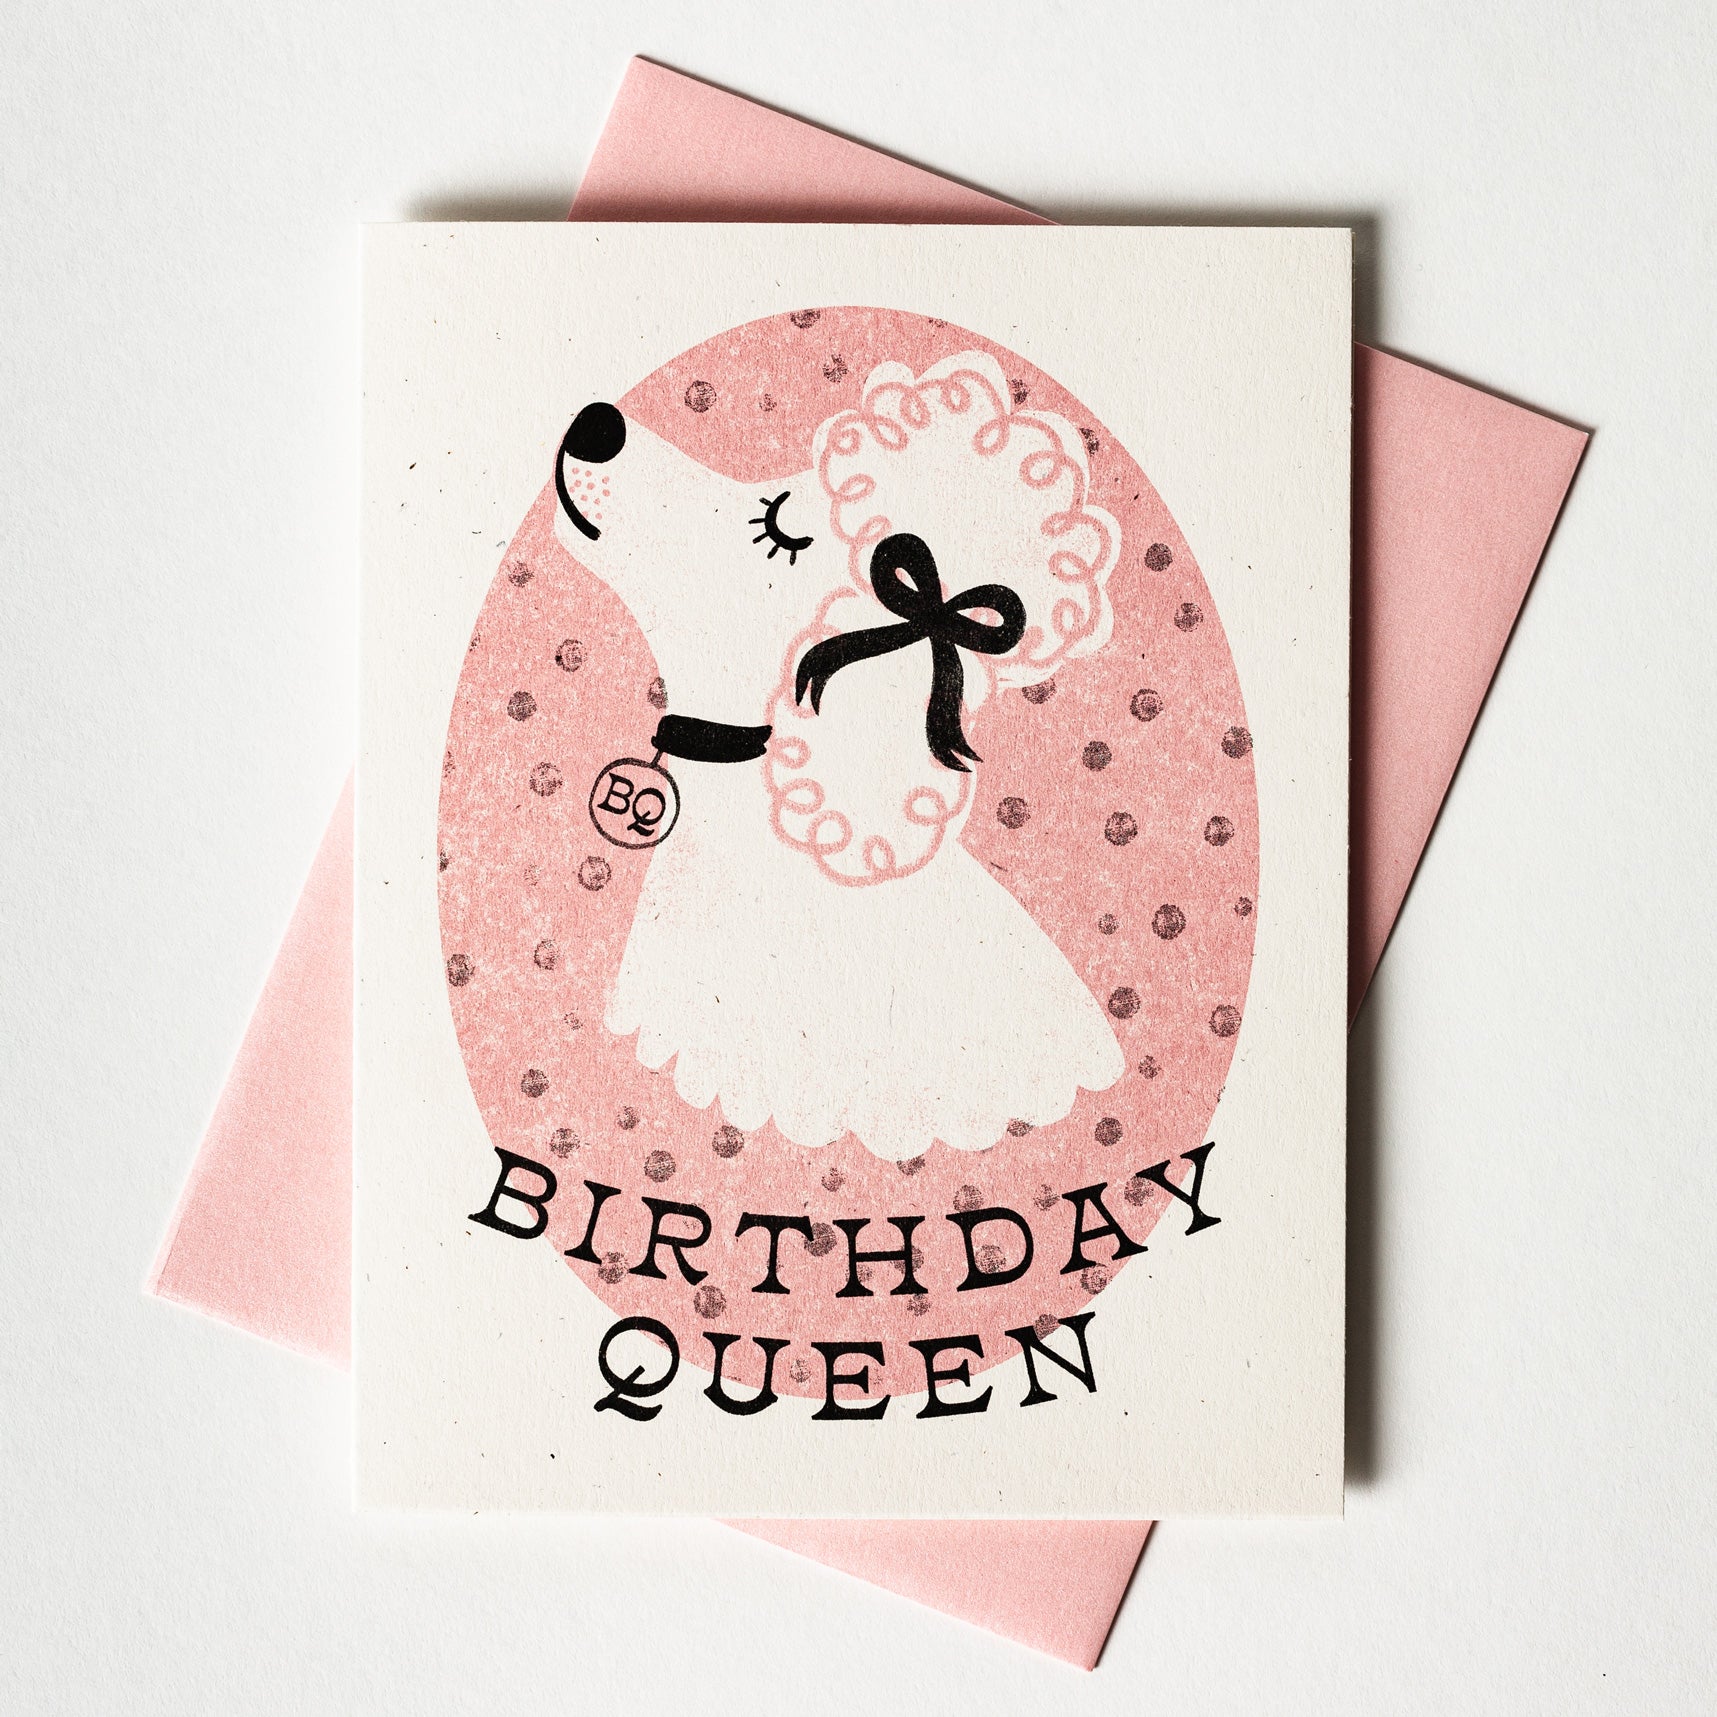 Birthday Queen Dog - Risograph Card